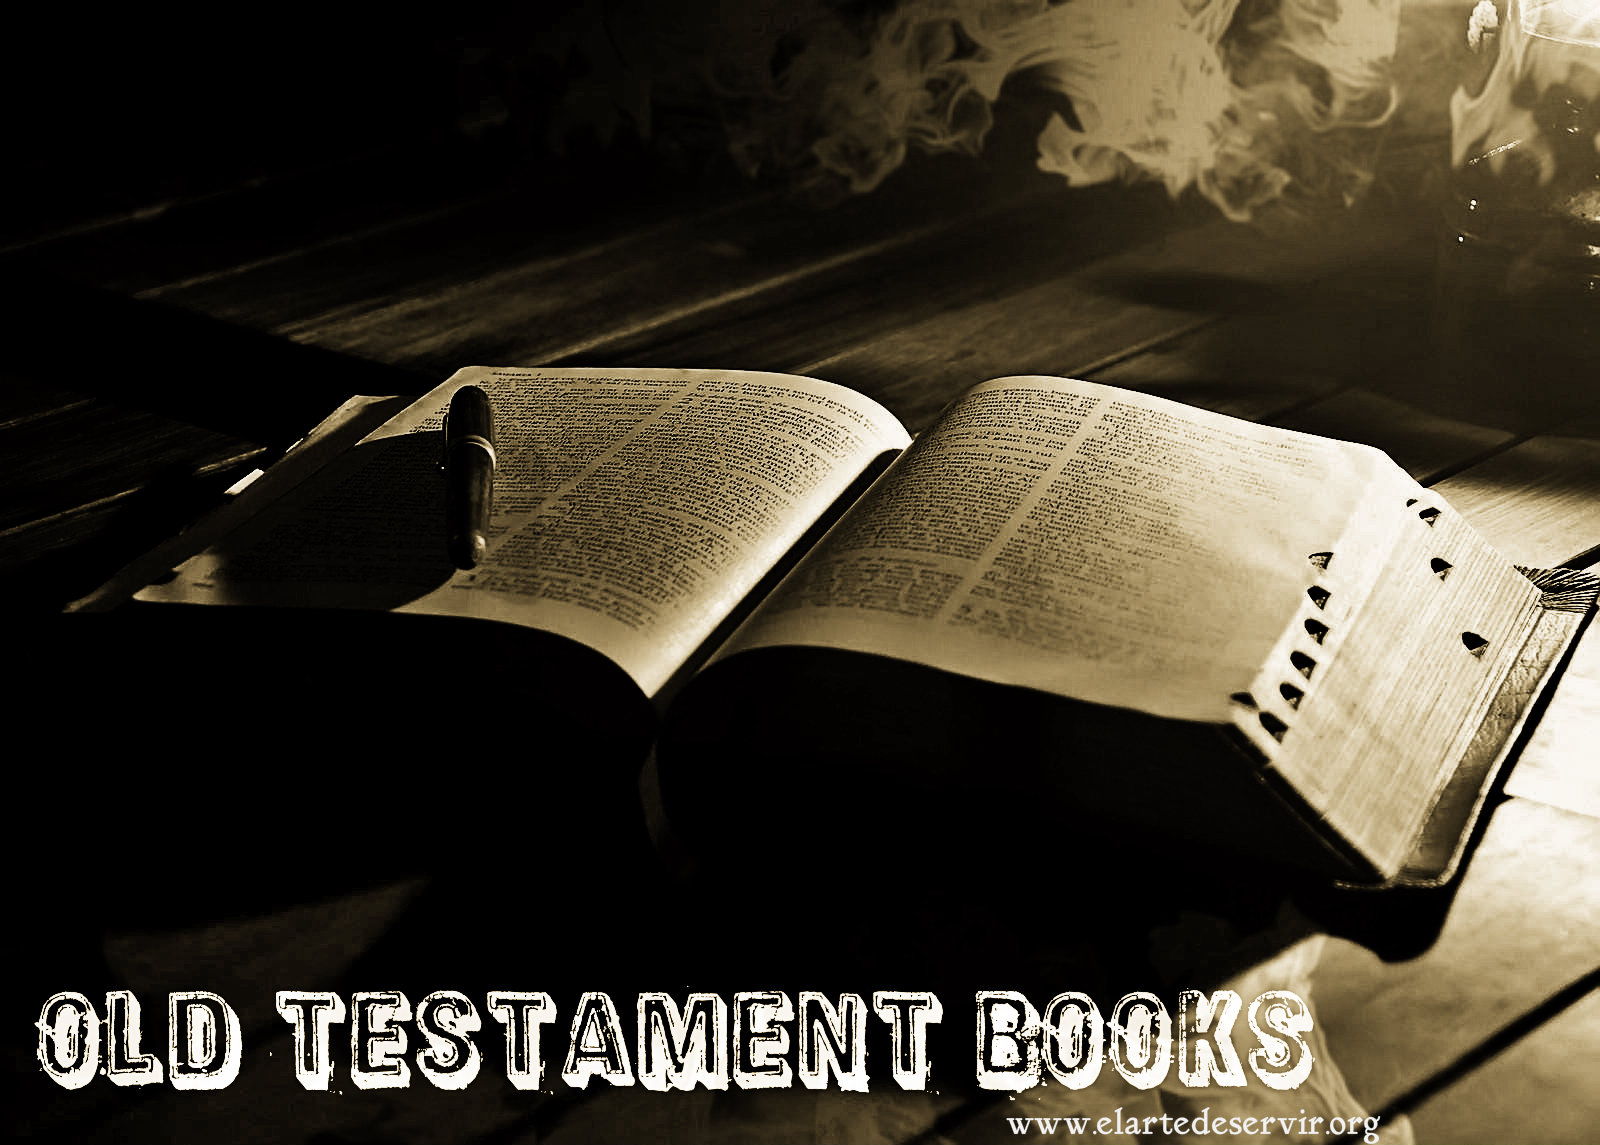 To download Old Testament Books * El Arte de Servir